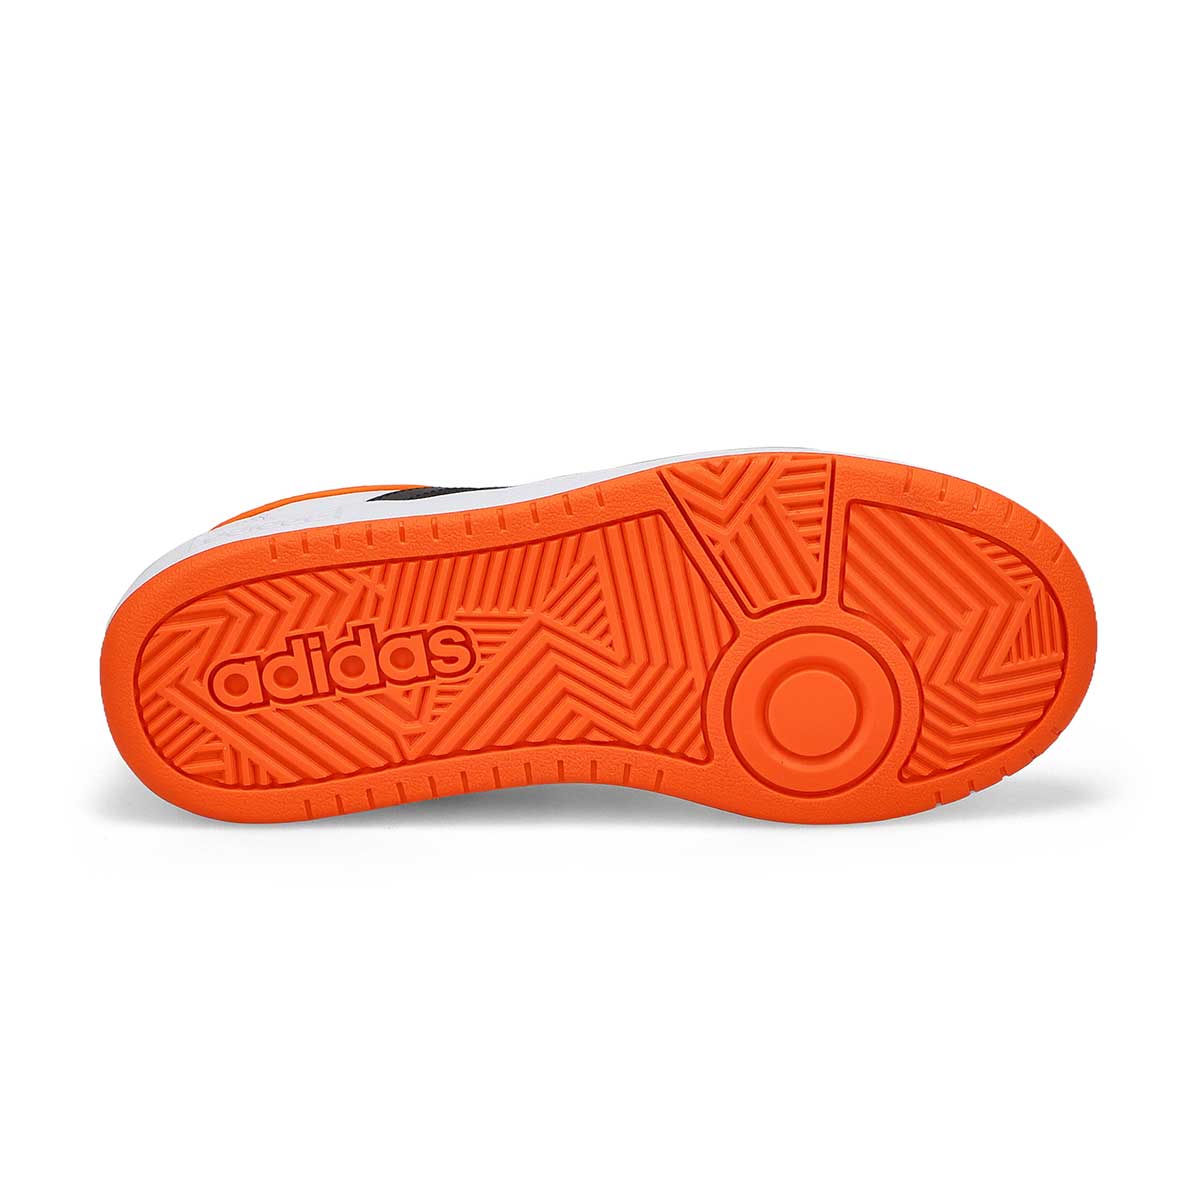 Kds' Hoops 3.0 K Sneaker - White/Black/Orange